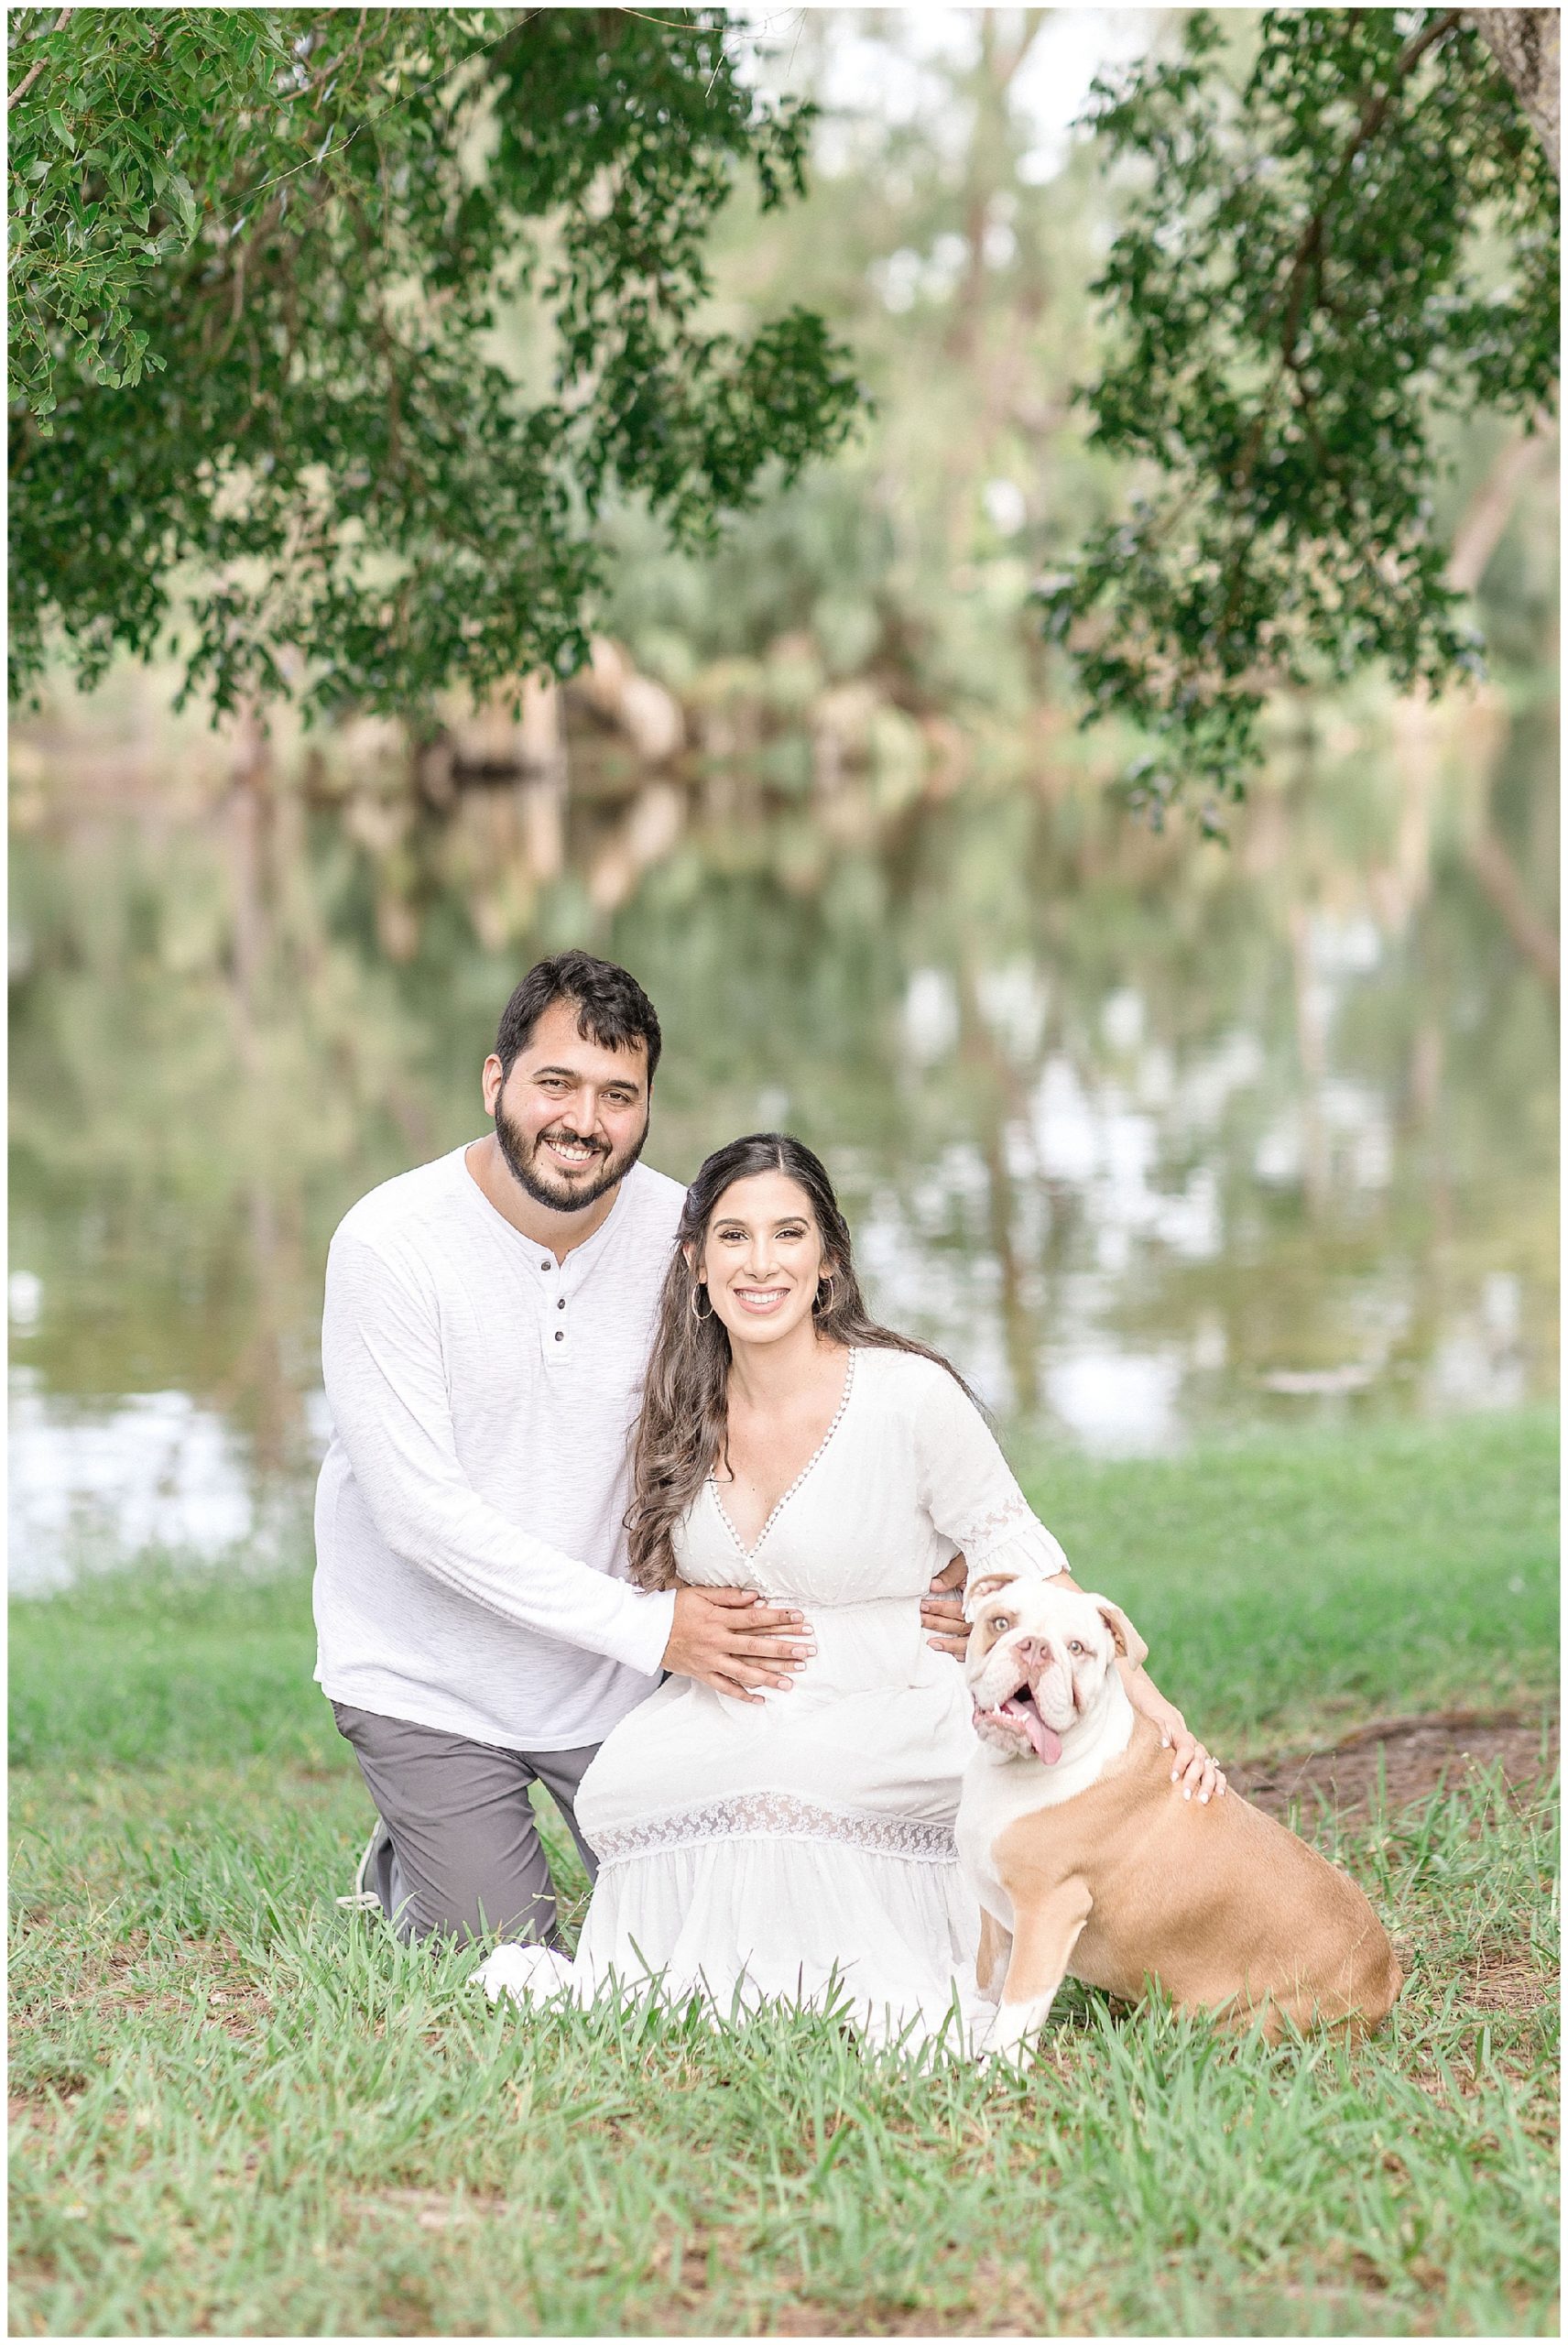 South Florida Maternity session with bulldog. Photos by Ivanna Vidal Photography.